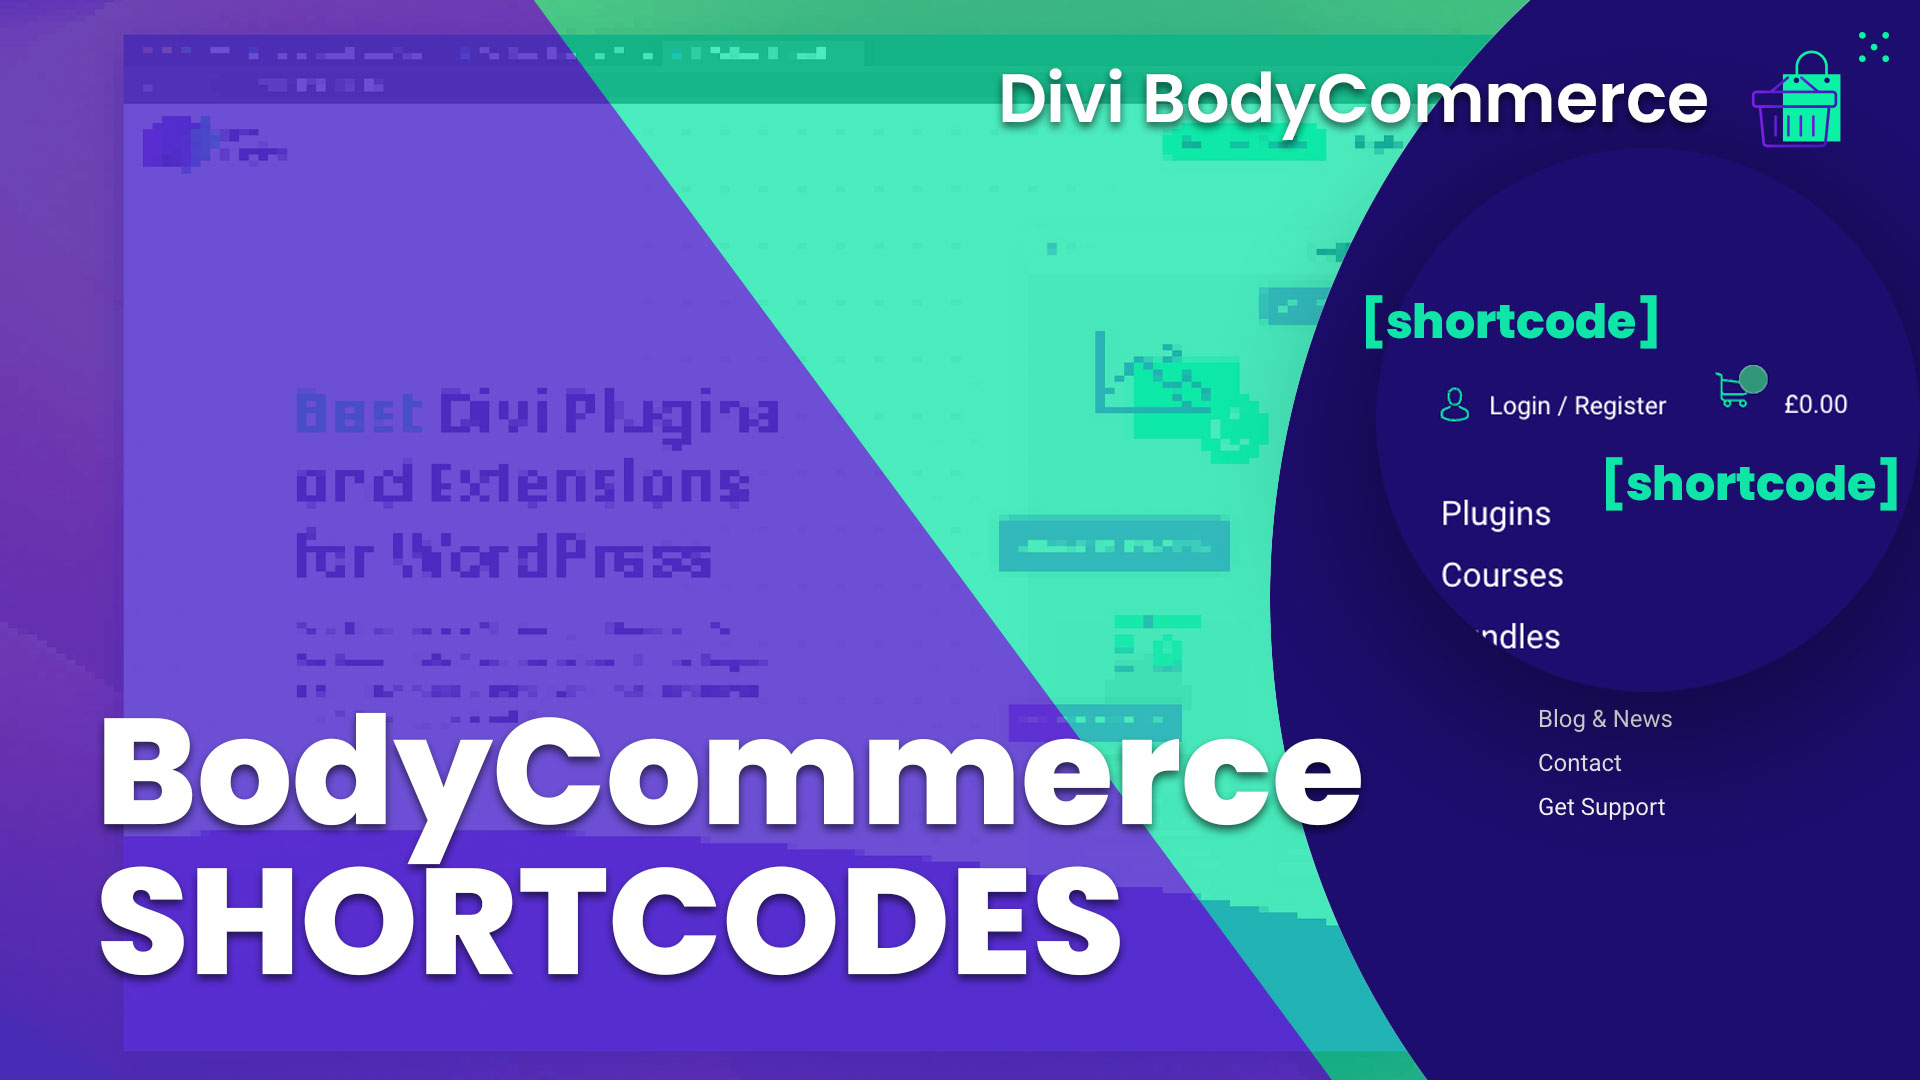 Divi Engine Series Using Divi BodyCommerce Shortcodes